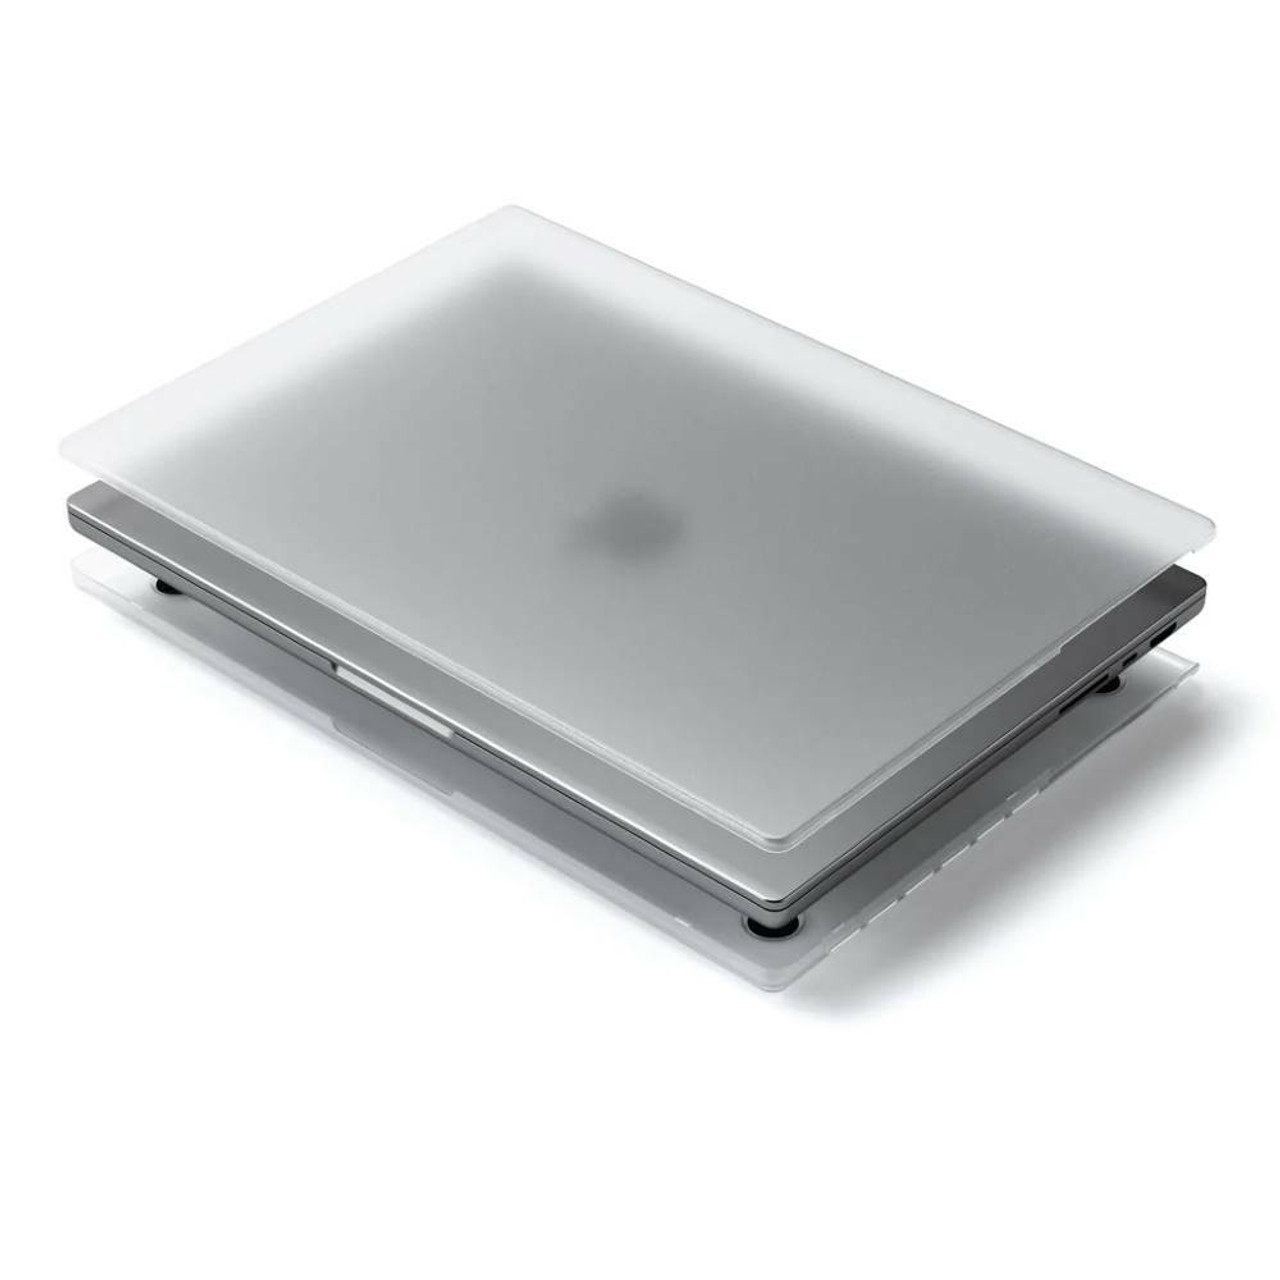 Macbook Pro case